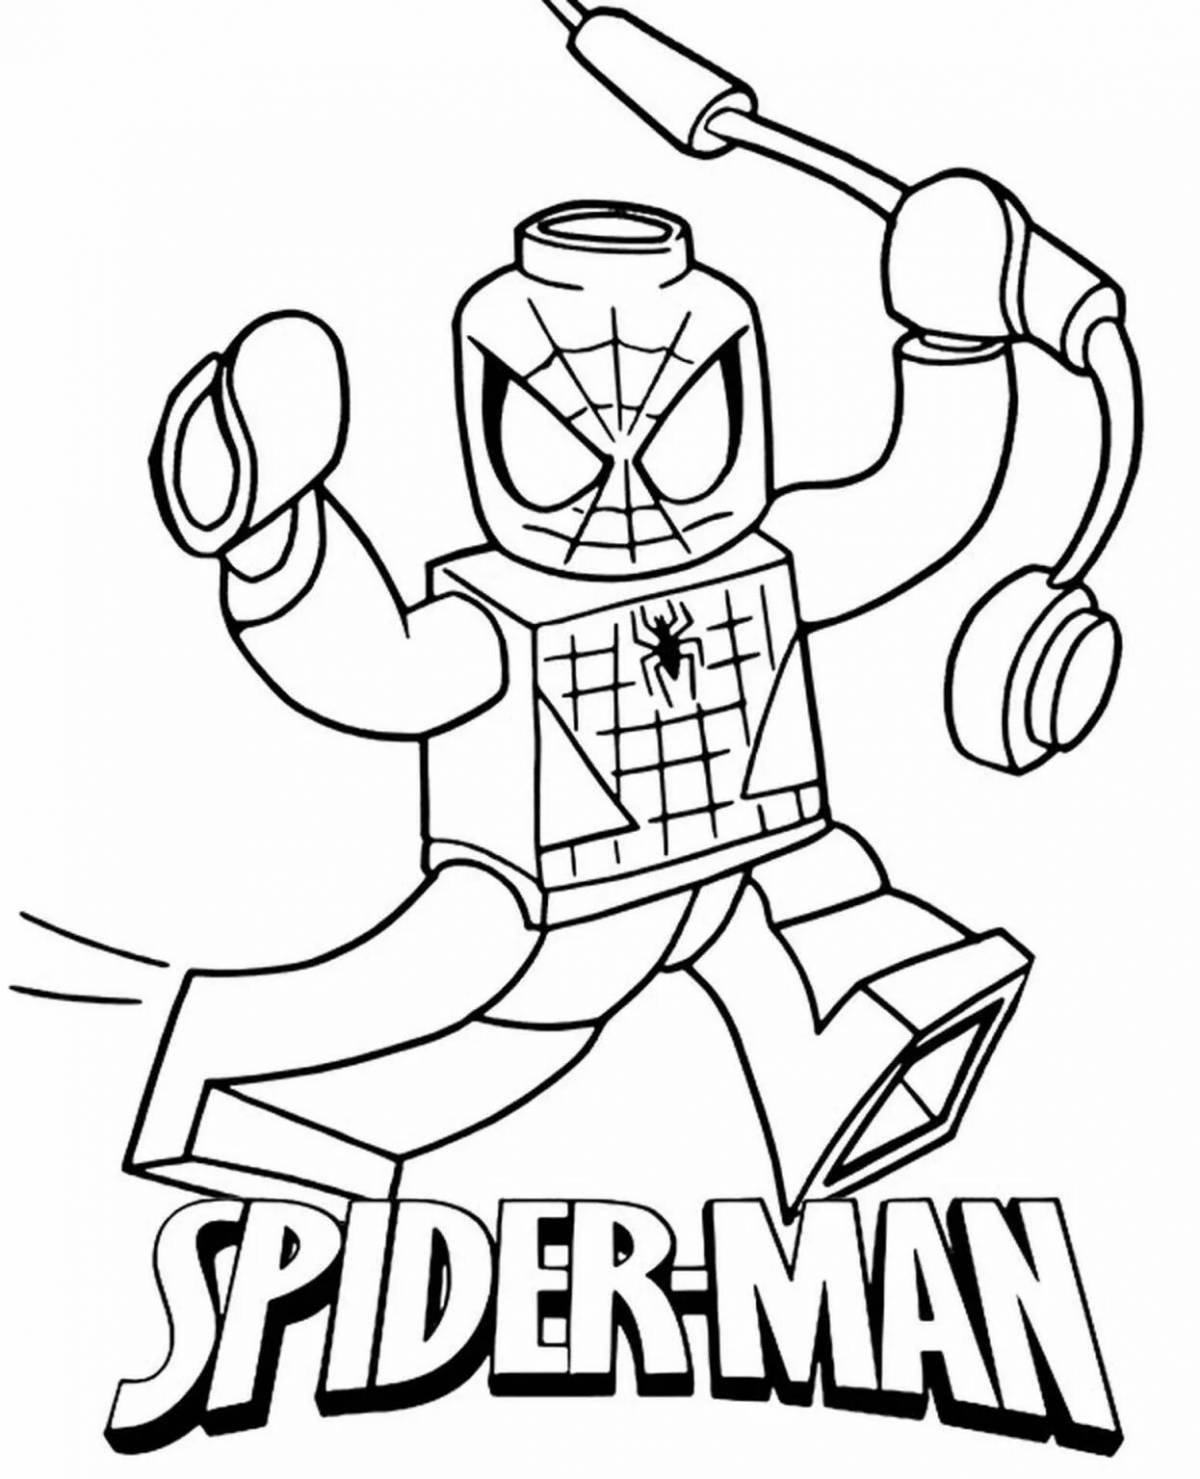 Lego adorable spiderman coloring page